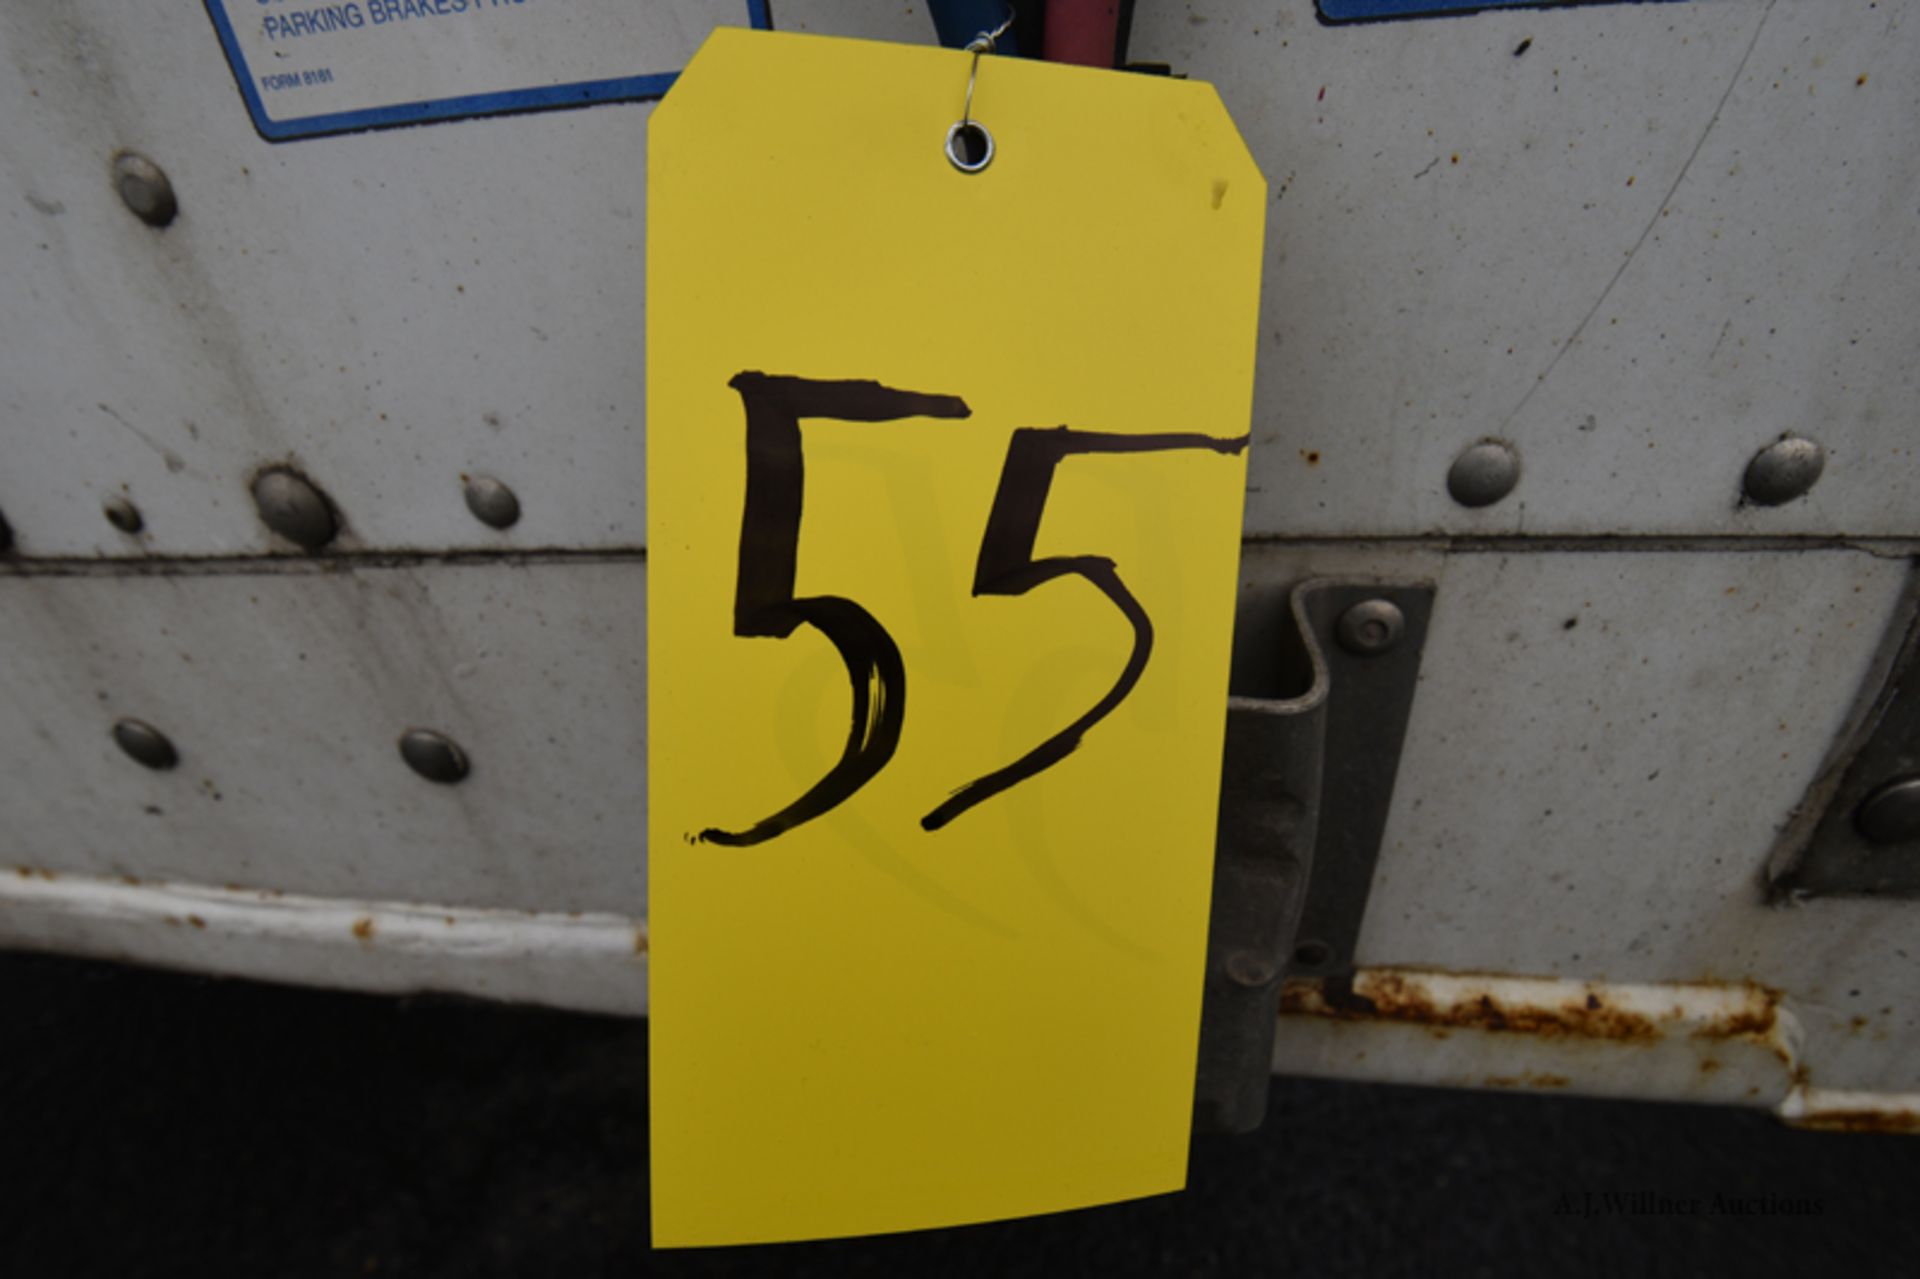 2014 Stoughton 53'-0 tandem axle van trailer, 13'-6' high VIN 1DW1A532XEB446030 (Unit #125366) - Image 12 of 12